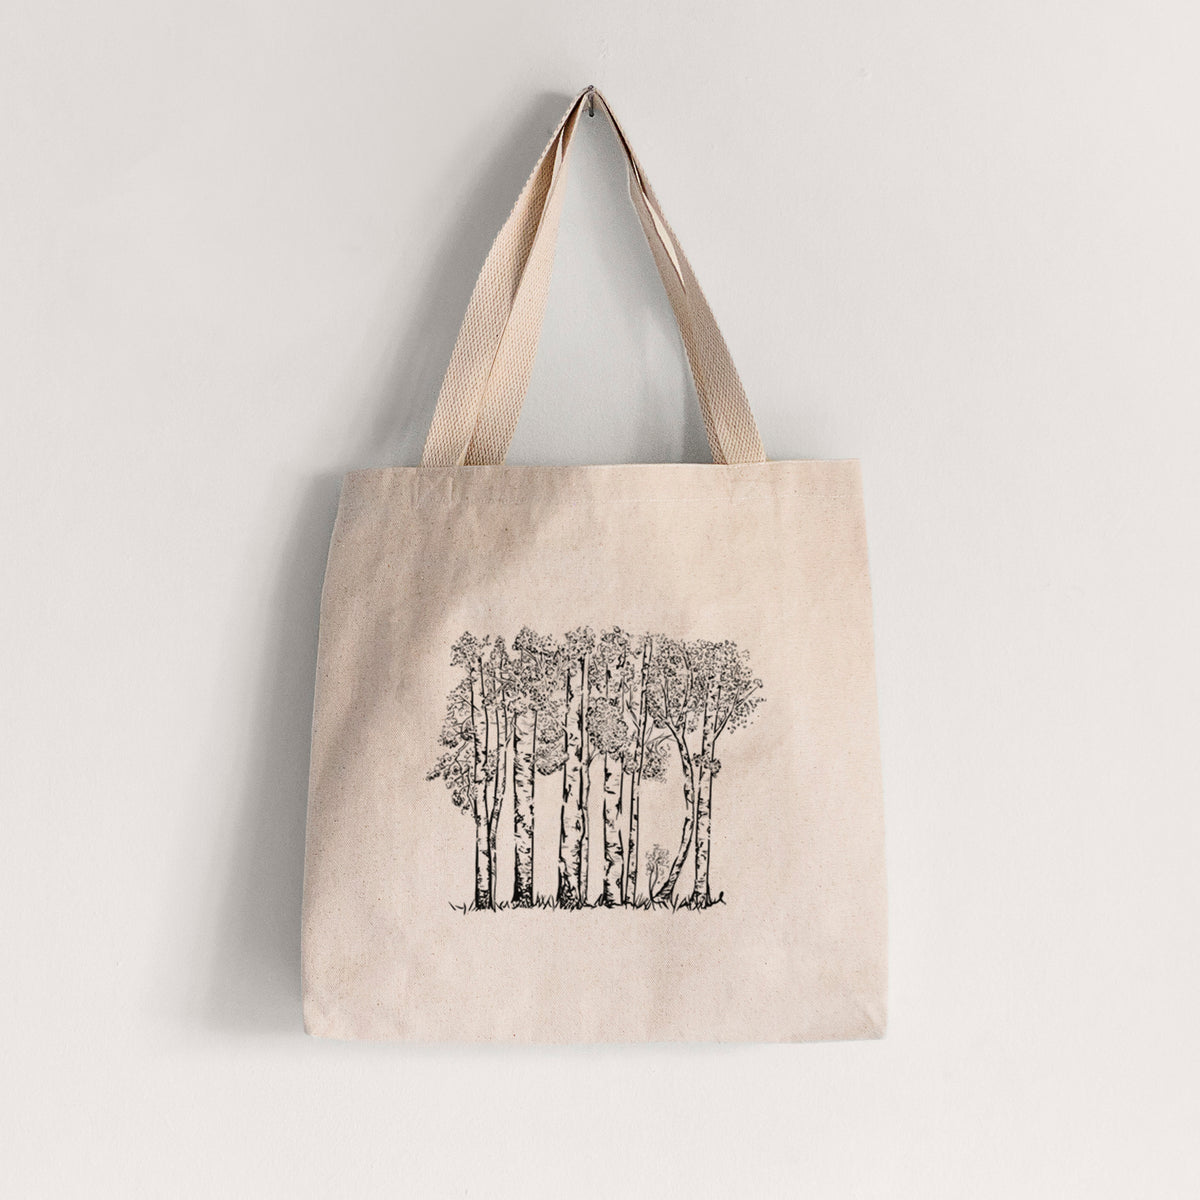 Quaking Aspens - Populus tremuloides - Tote Bag